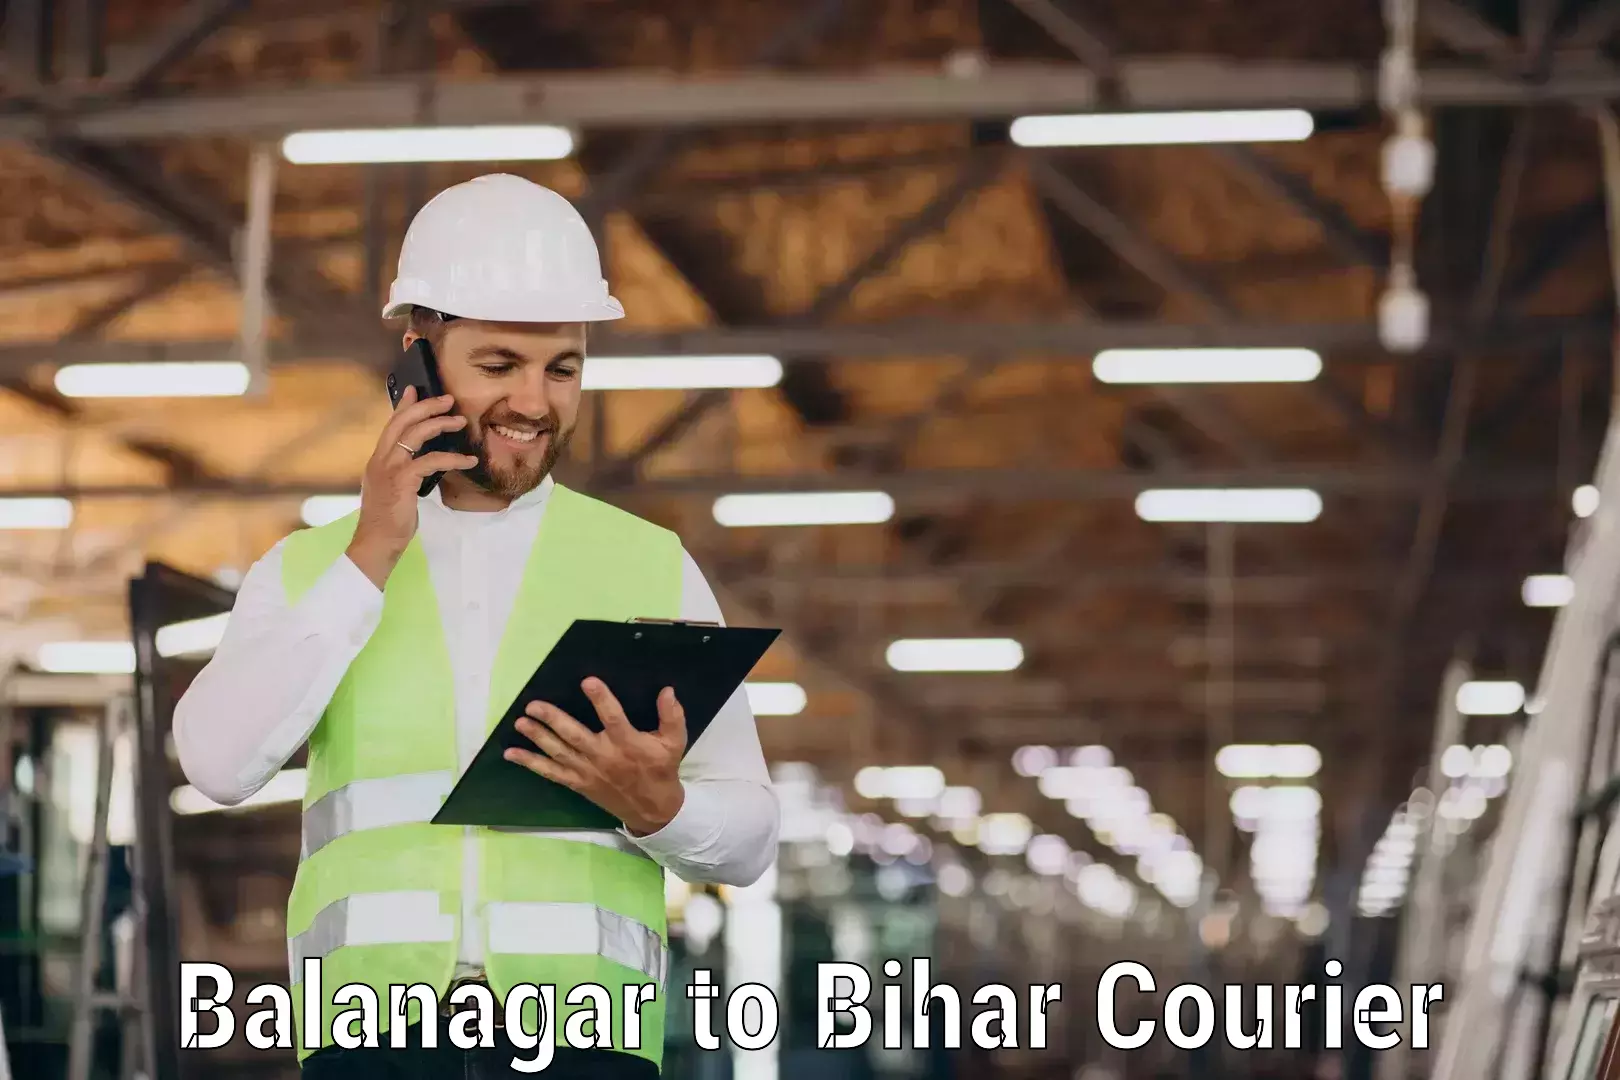 On-call courier service Balanagar to Samastipur